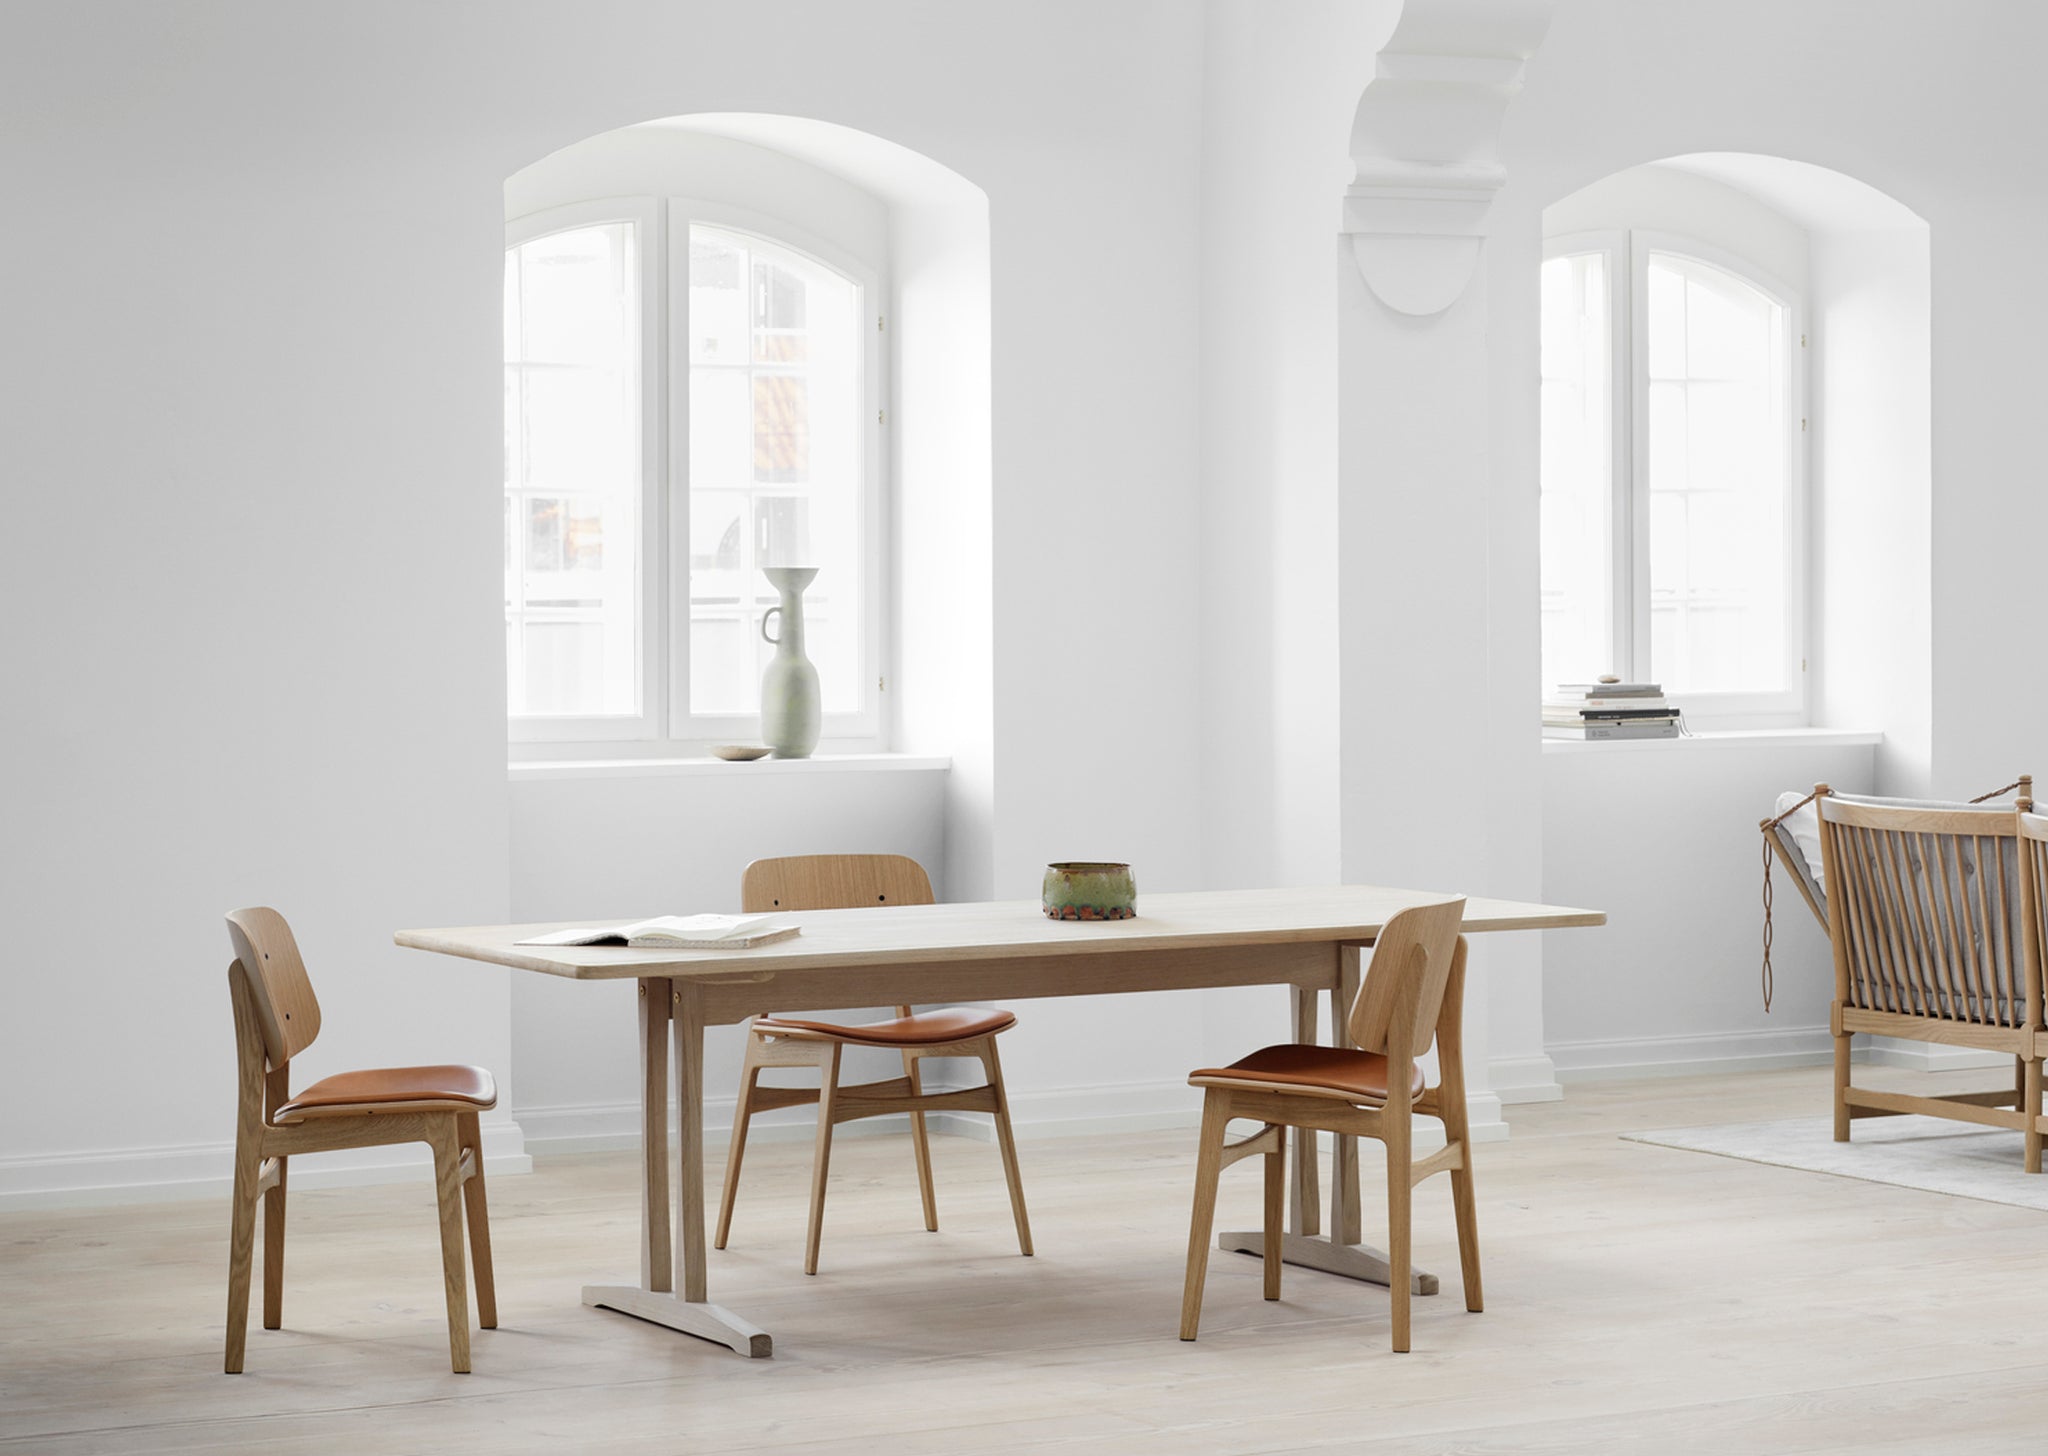 Soborg Chair — Wood Frame